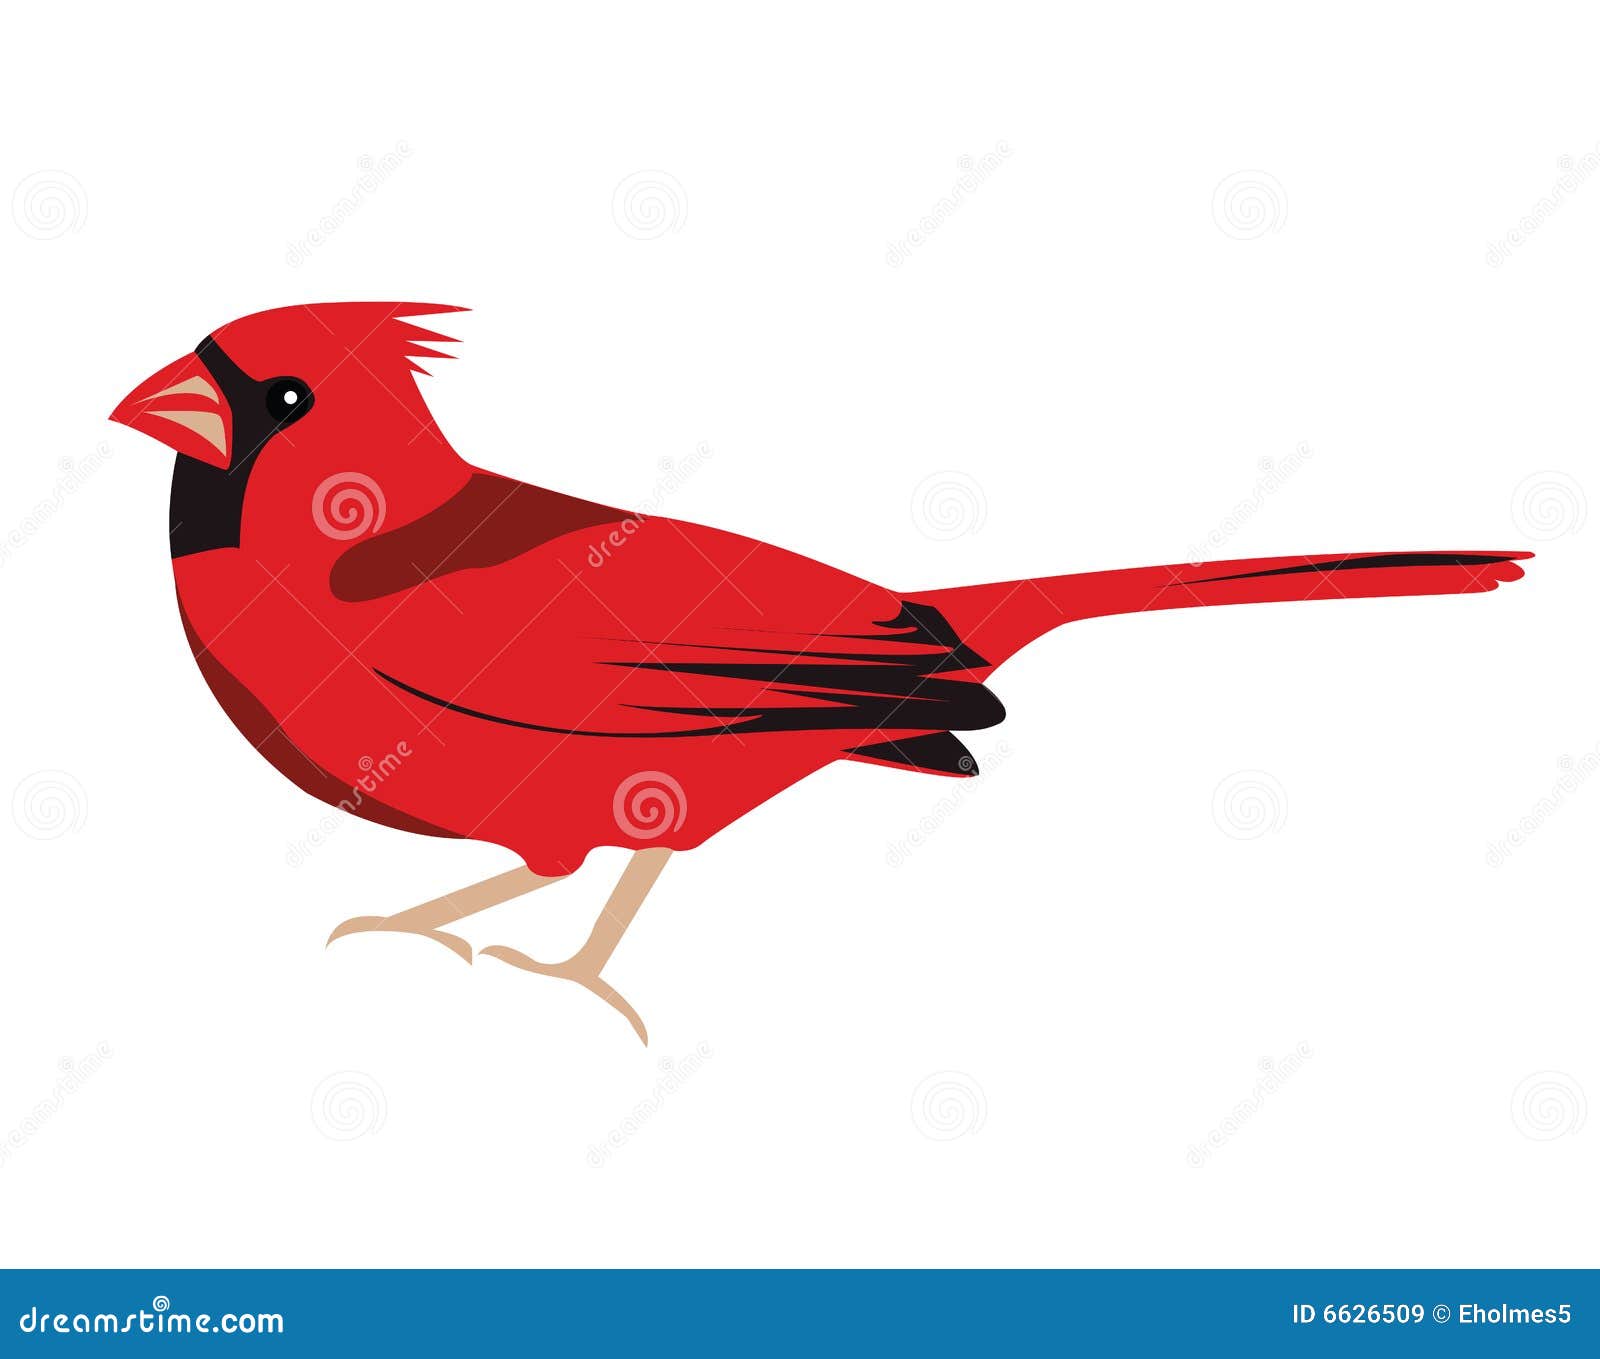 cardinal clipart free - photo #22